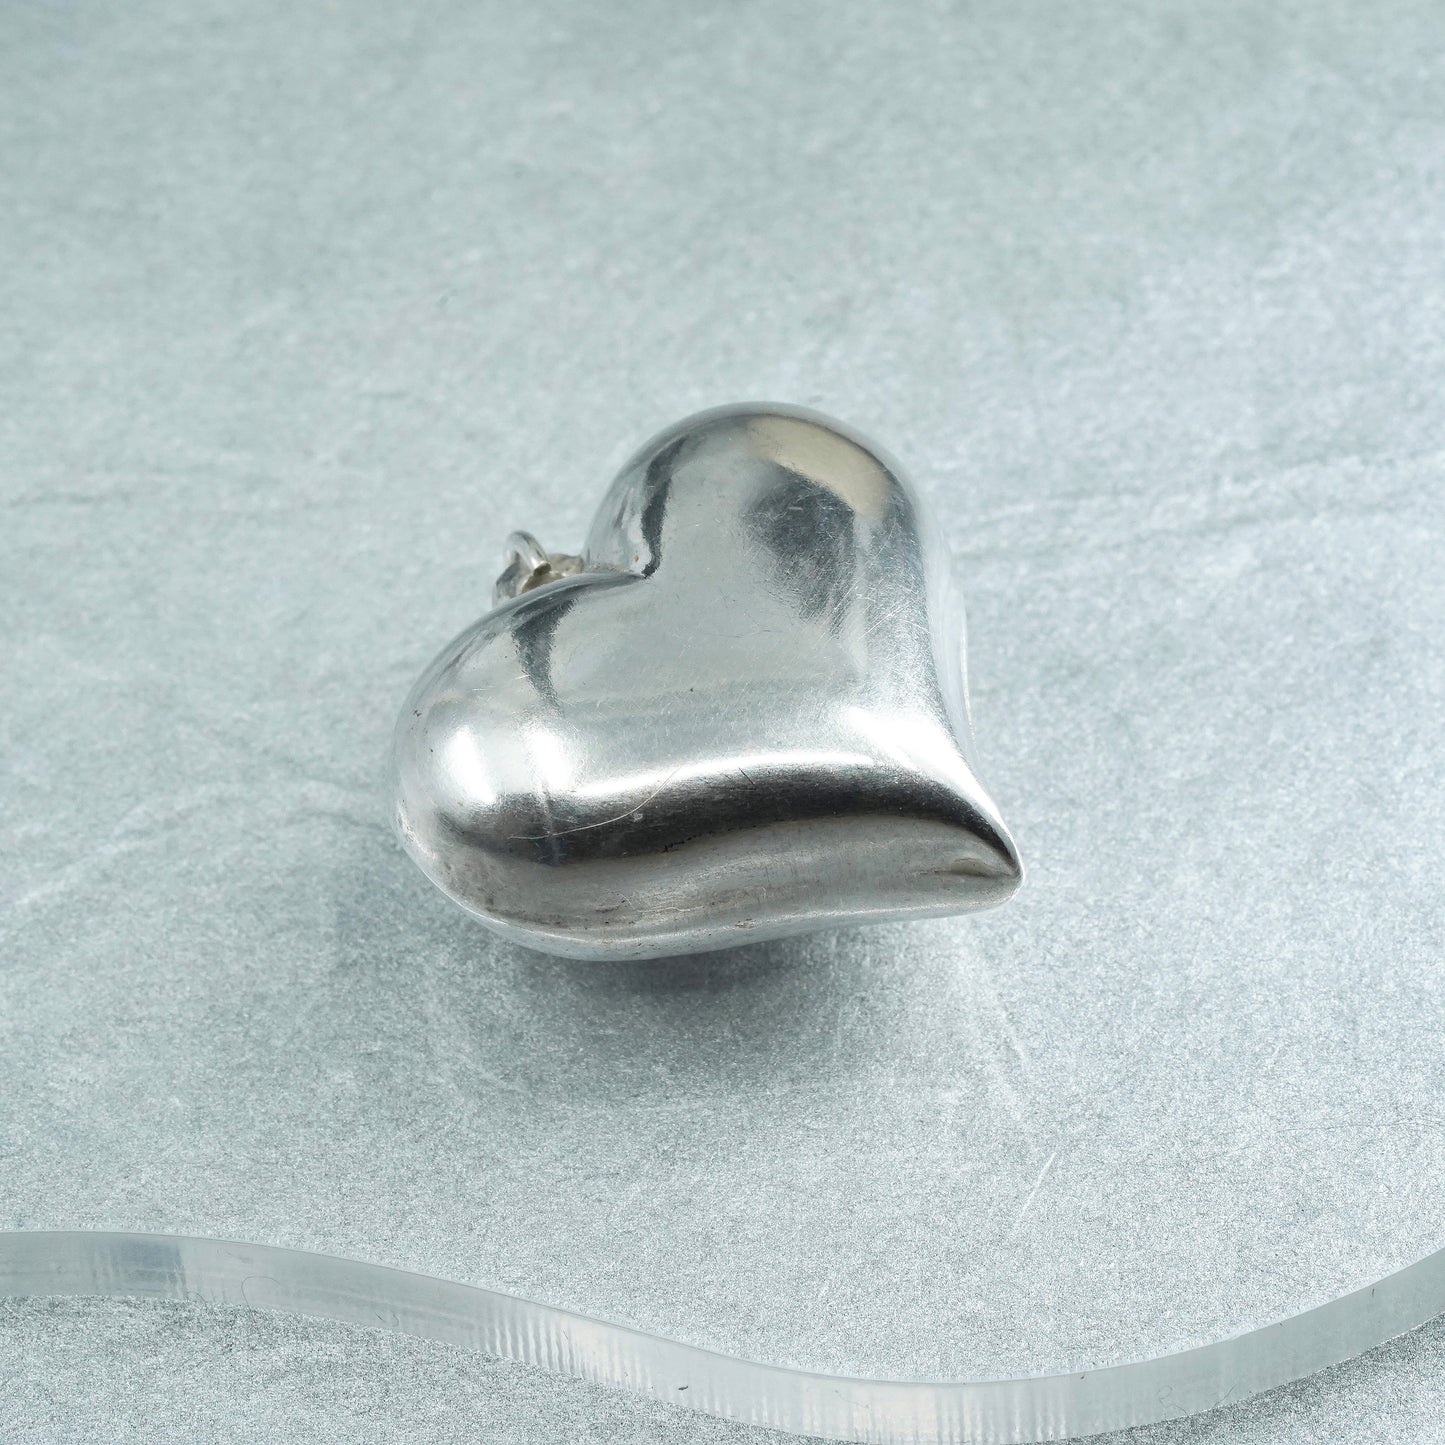 Vintage sterling 925 silver handmade puffy heart pendant